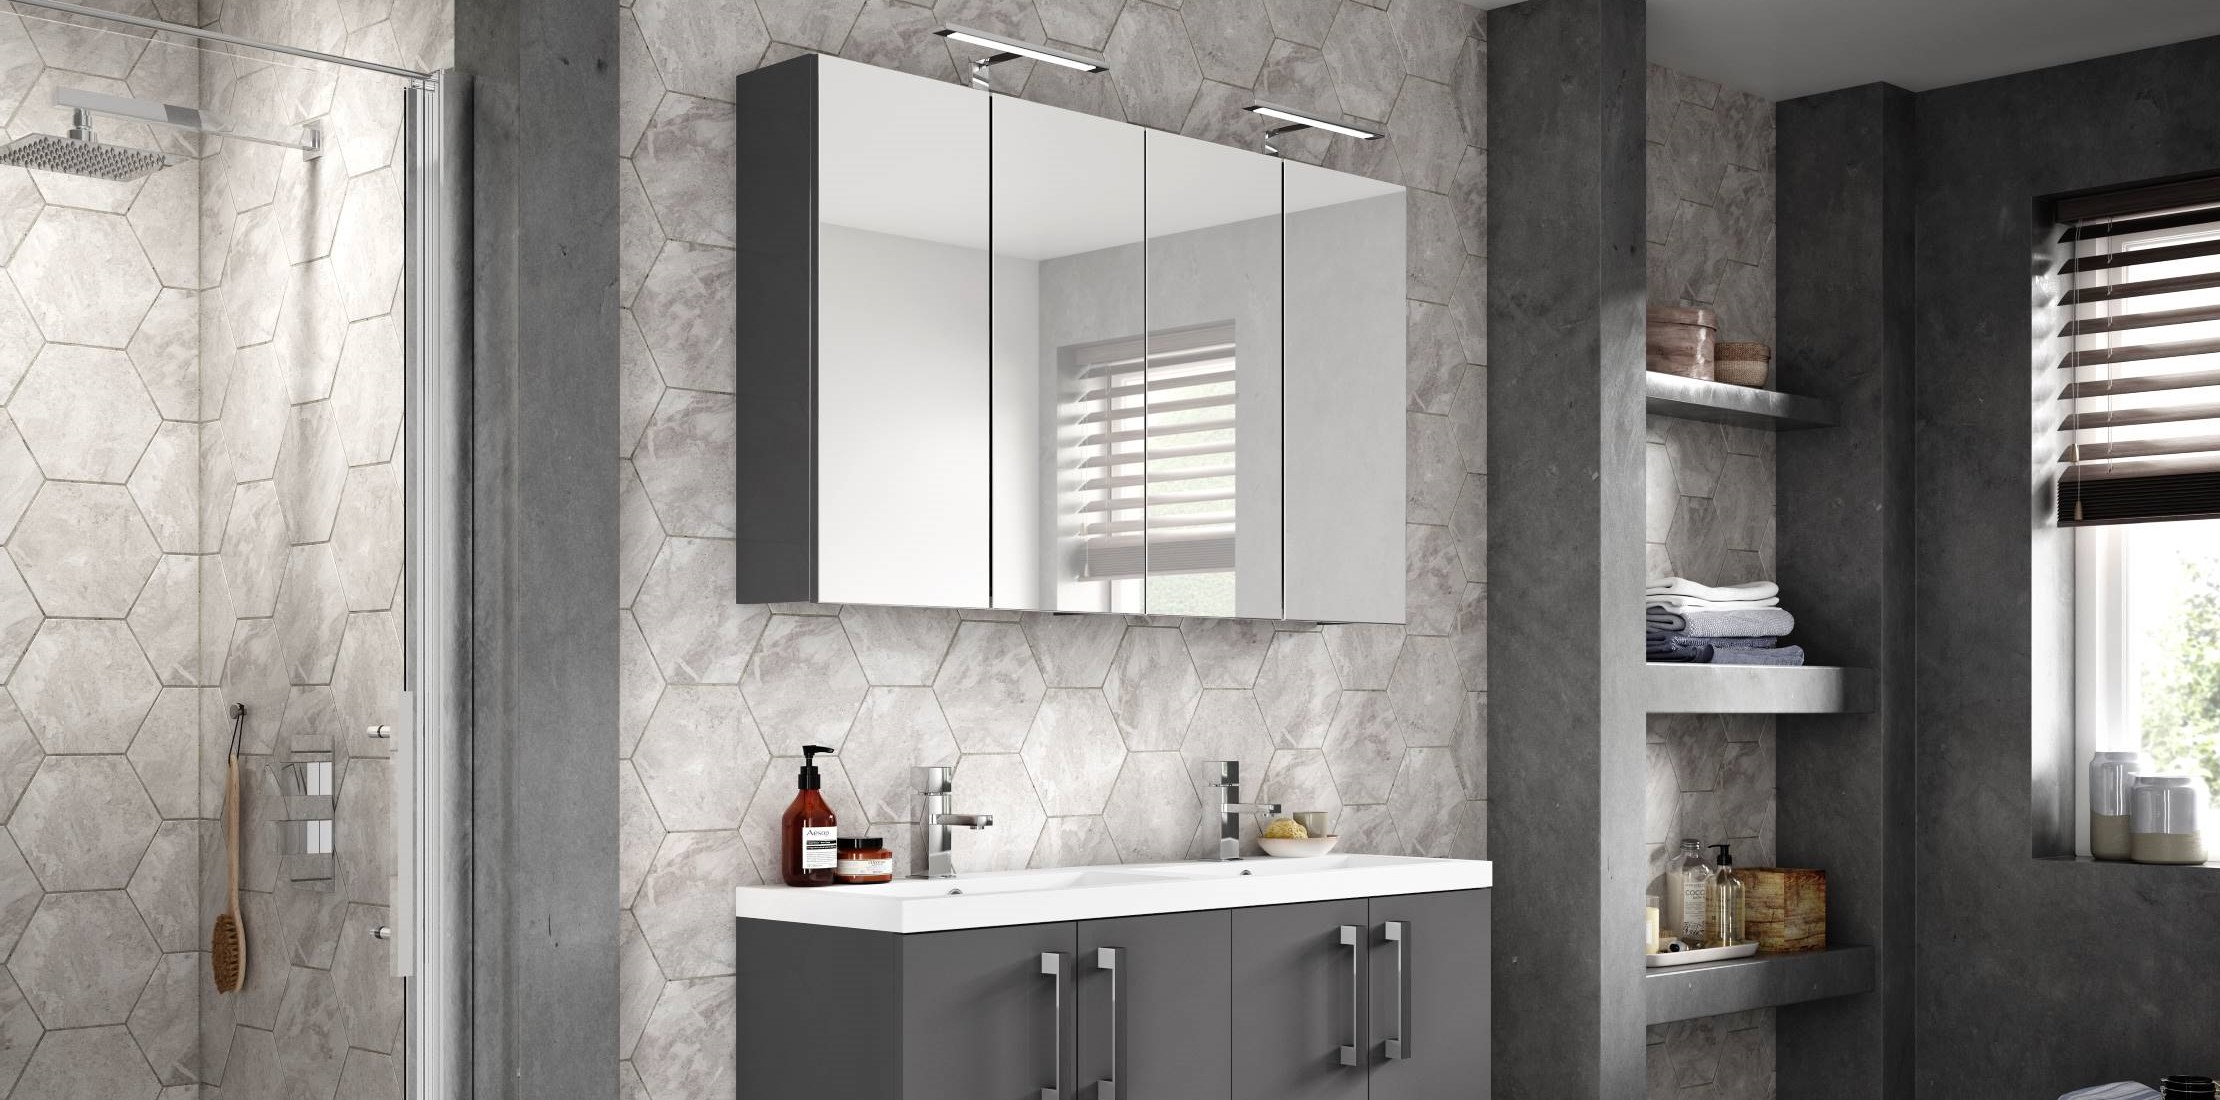 Different Bathroom Shelf Ideas for Your Next Redesign